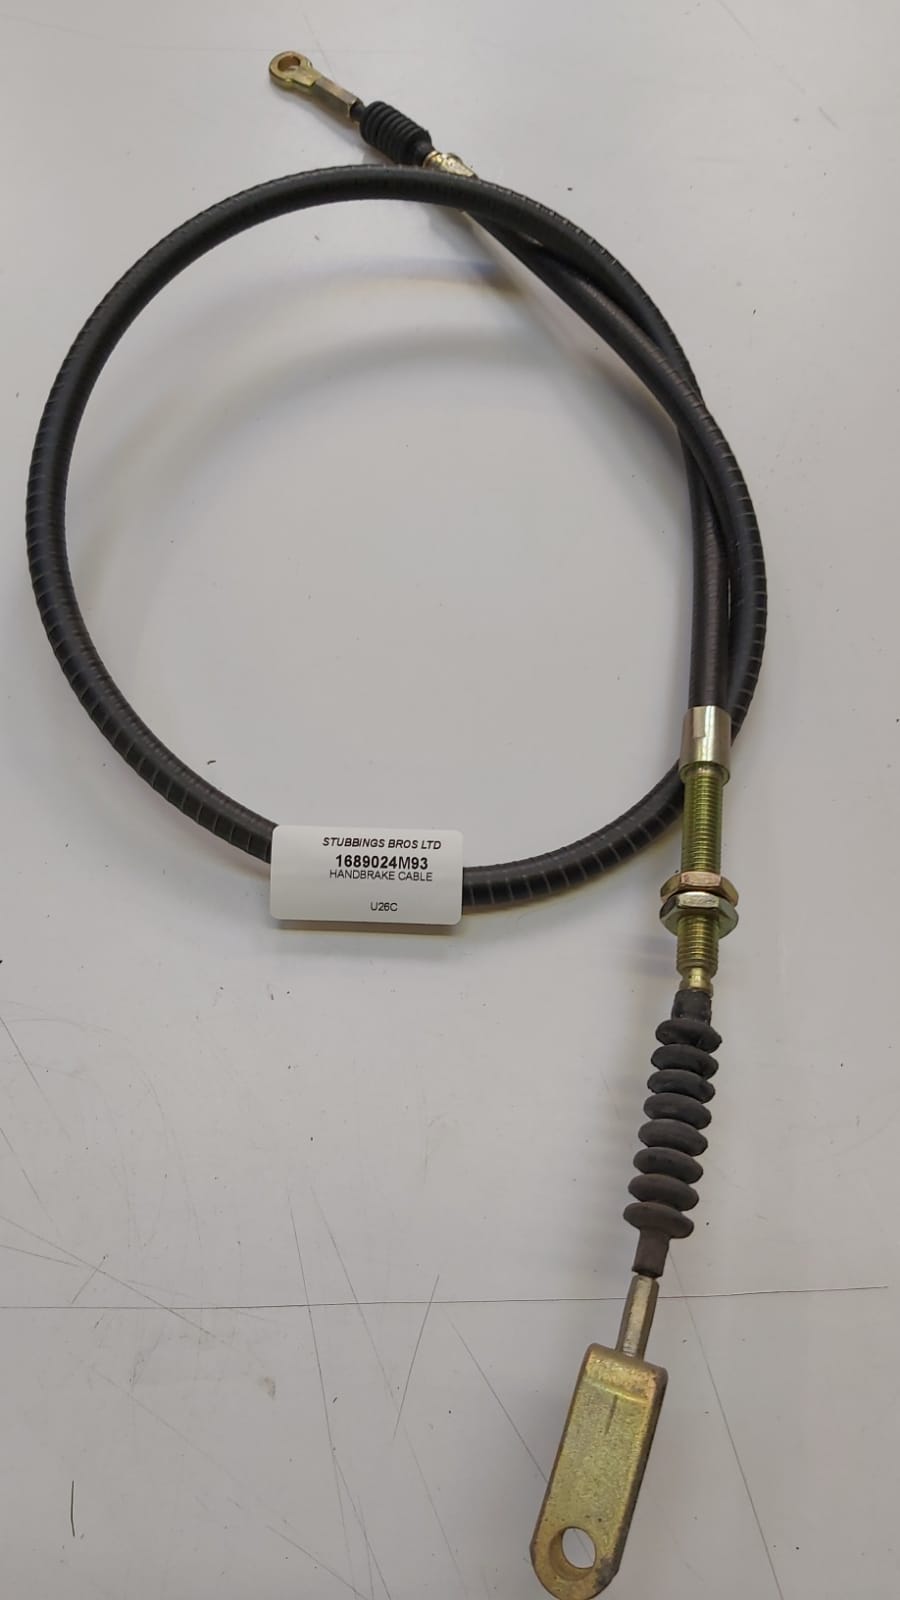 handbrake-cable-1689024m93